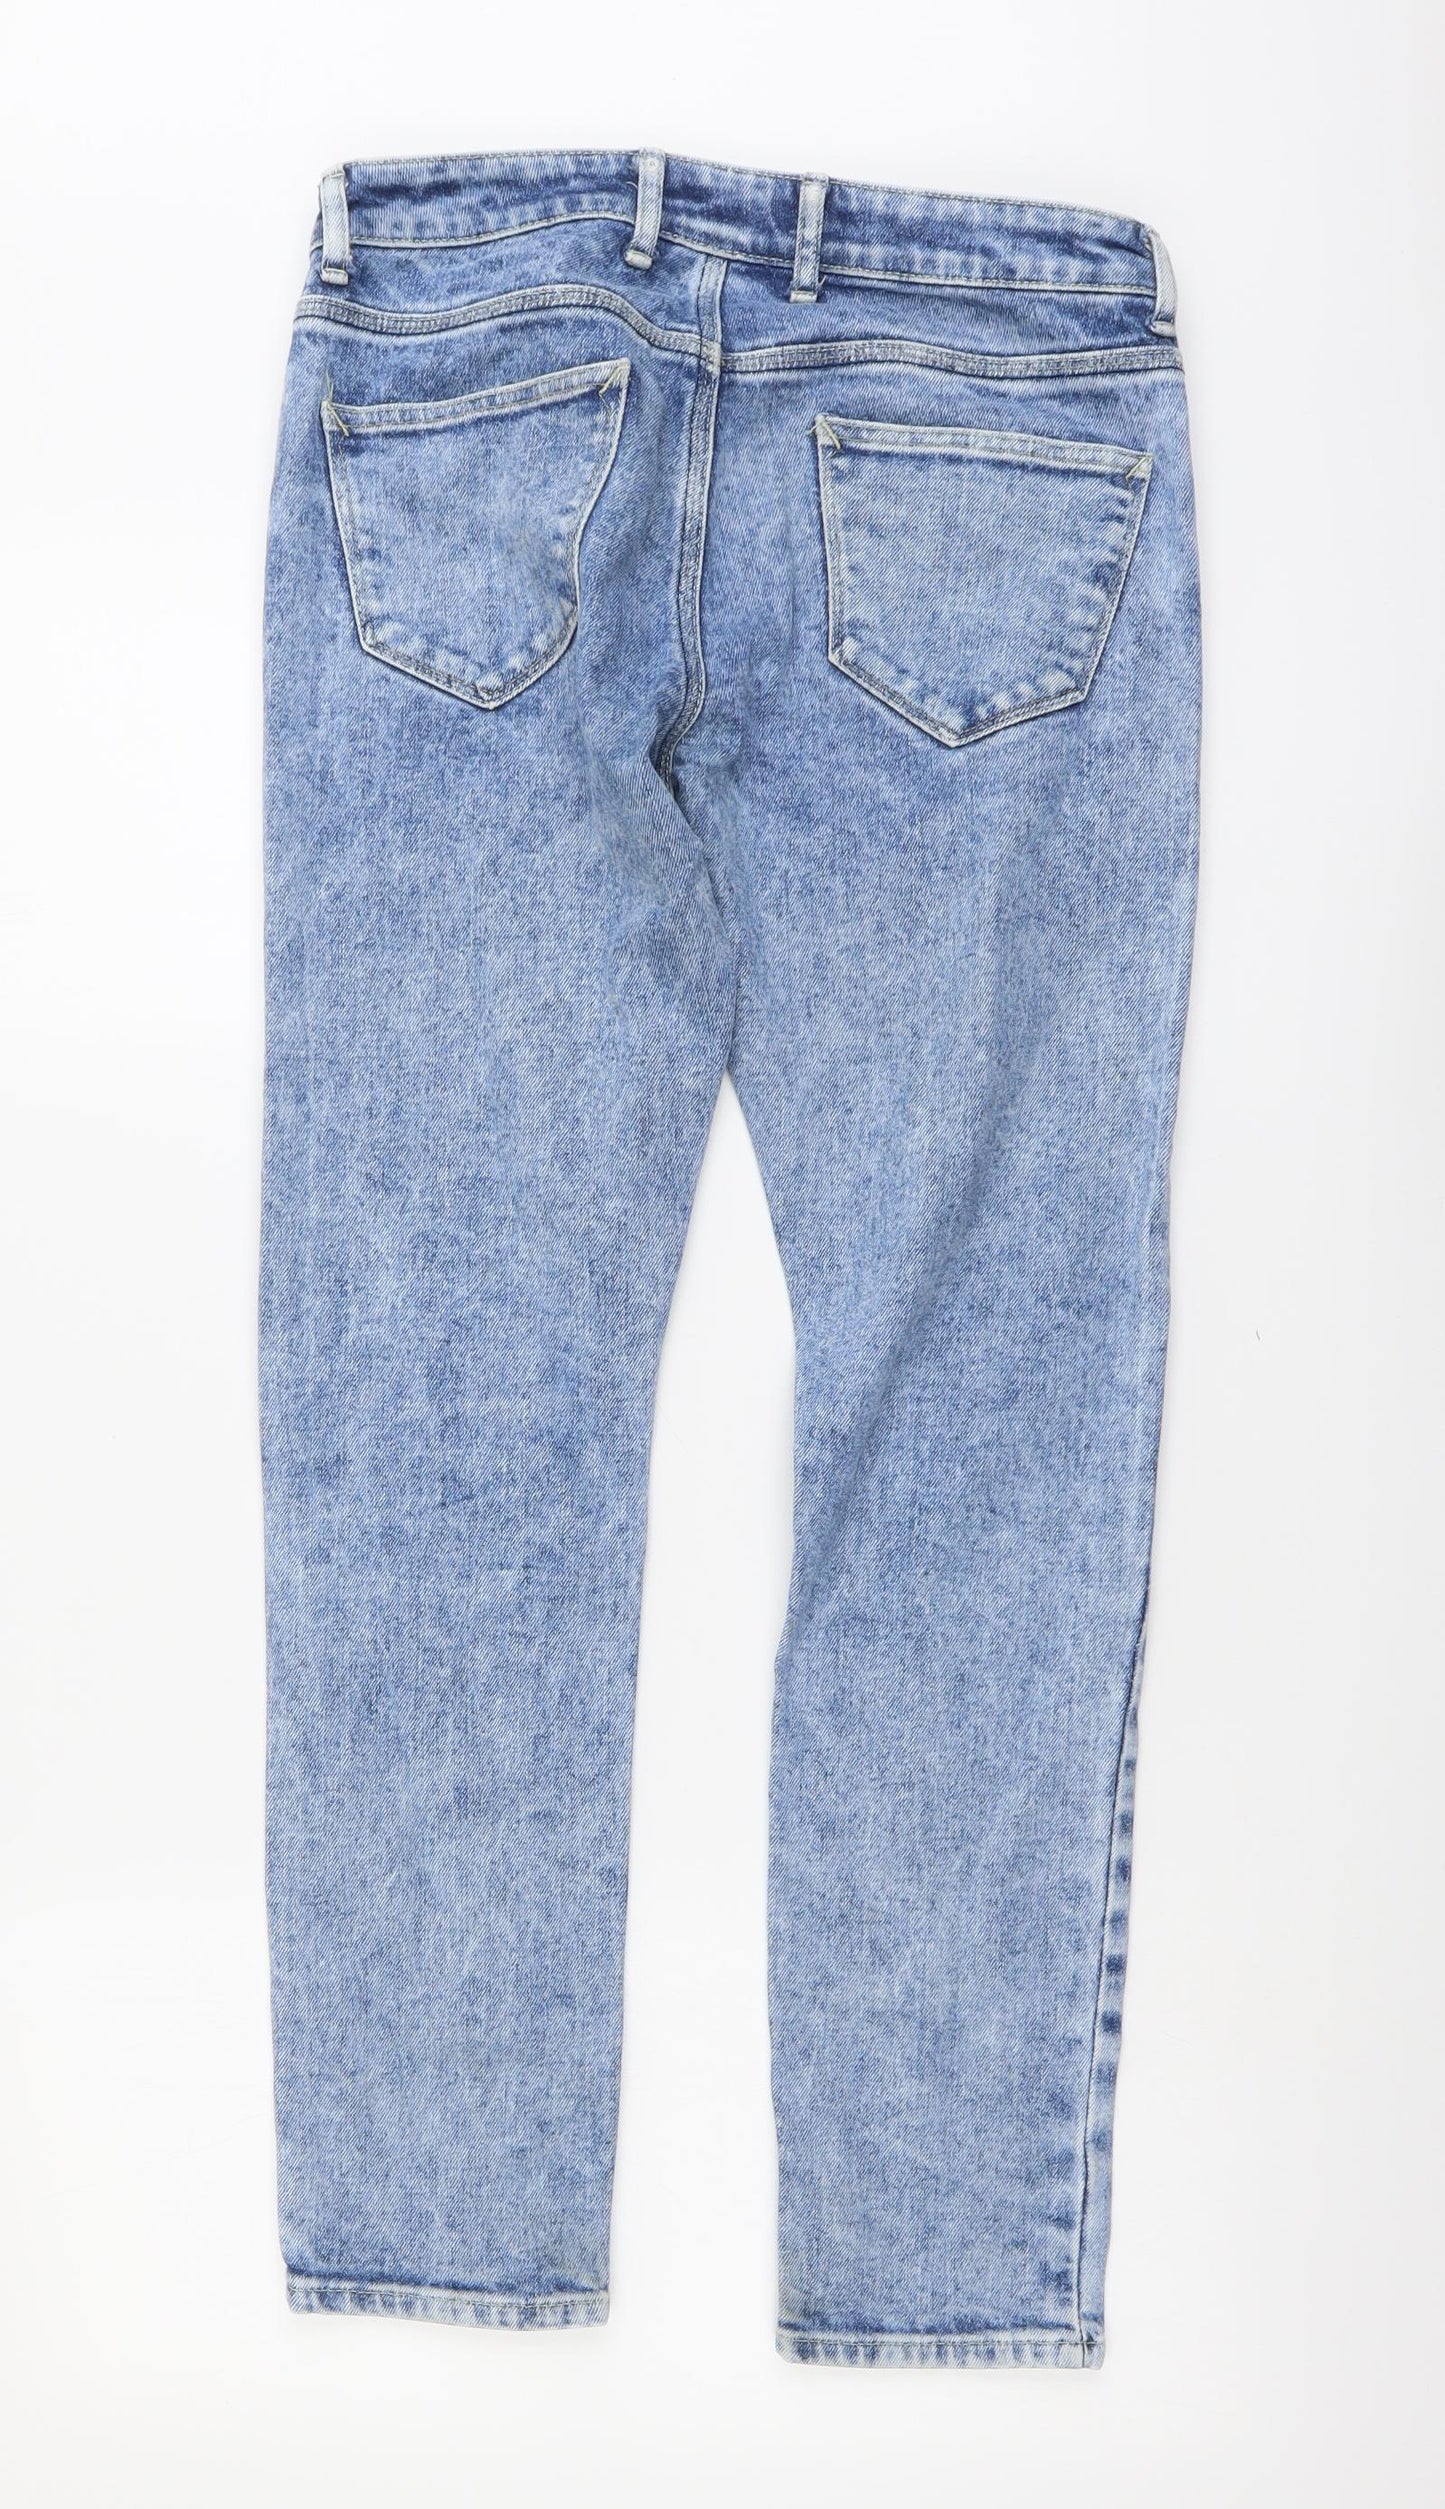 Topman Mens Blue Cotton Skinny Jeans Size 30 in L28 in Regular Button - Vintage Wash